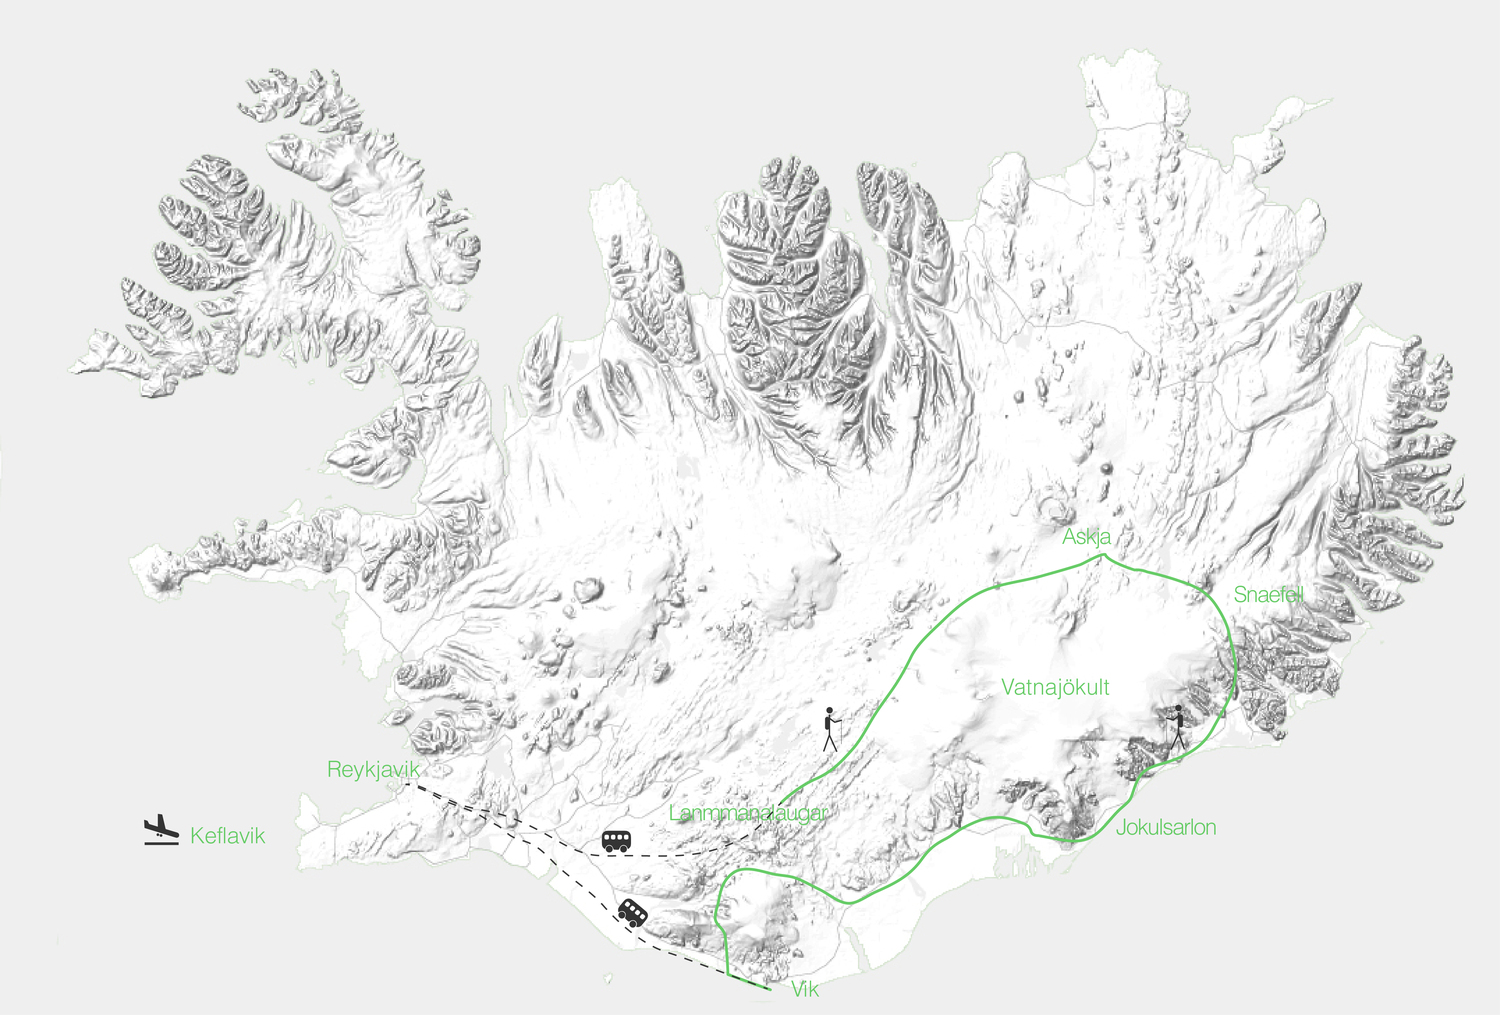 frontscape mattia vettorello esplorazione nature iceland
			thoreau trekking2